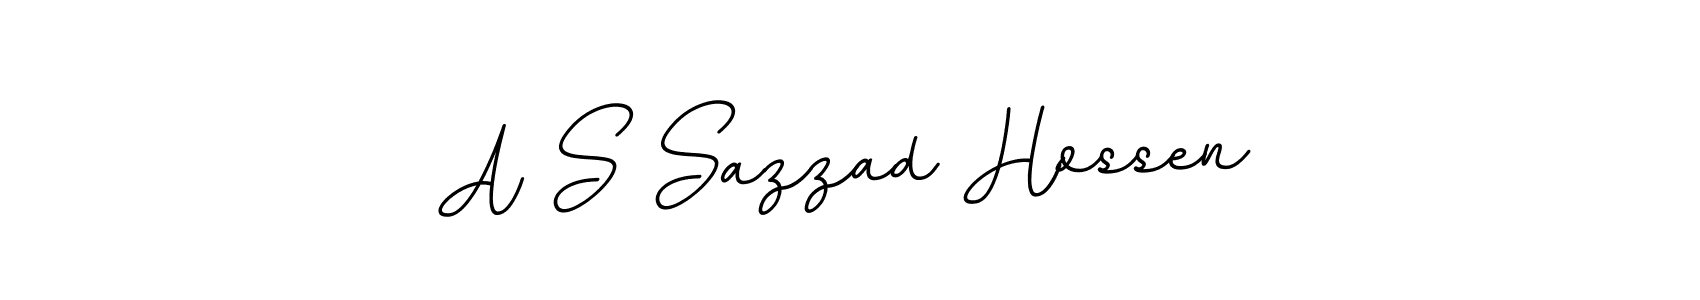 How to Draw A S Sazzad Hossen signature style? BallpointsItalic-DORy9 is a latest design signature styles for name A S Sazzad Hossen. A S Sazzad Hossen signature style 11 images and pictures png